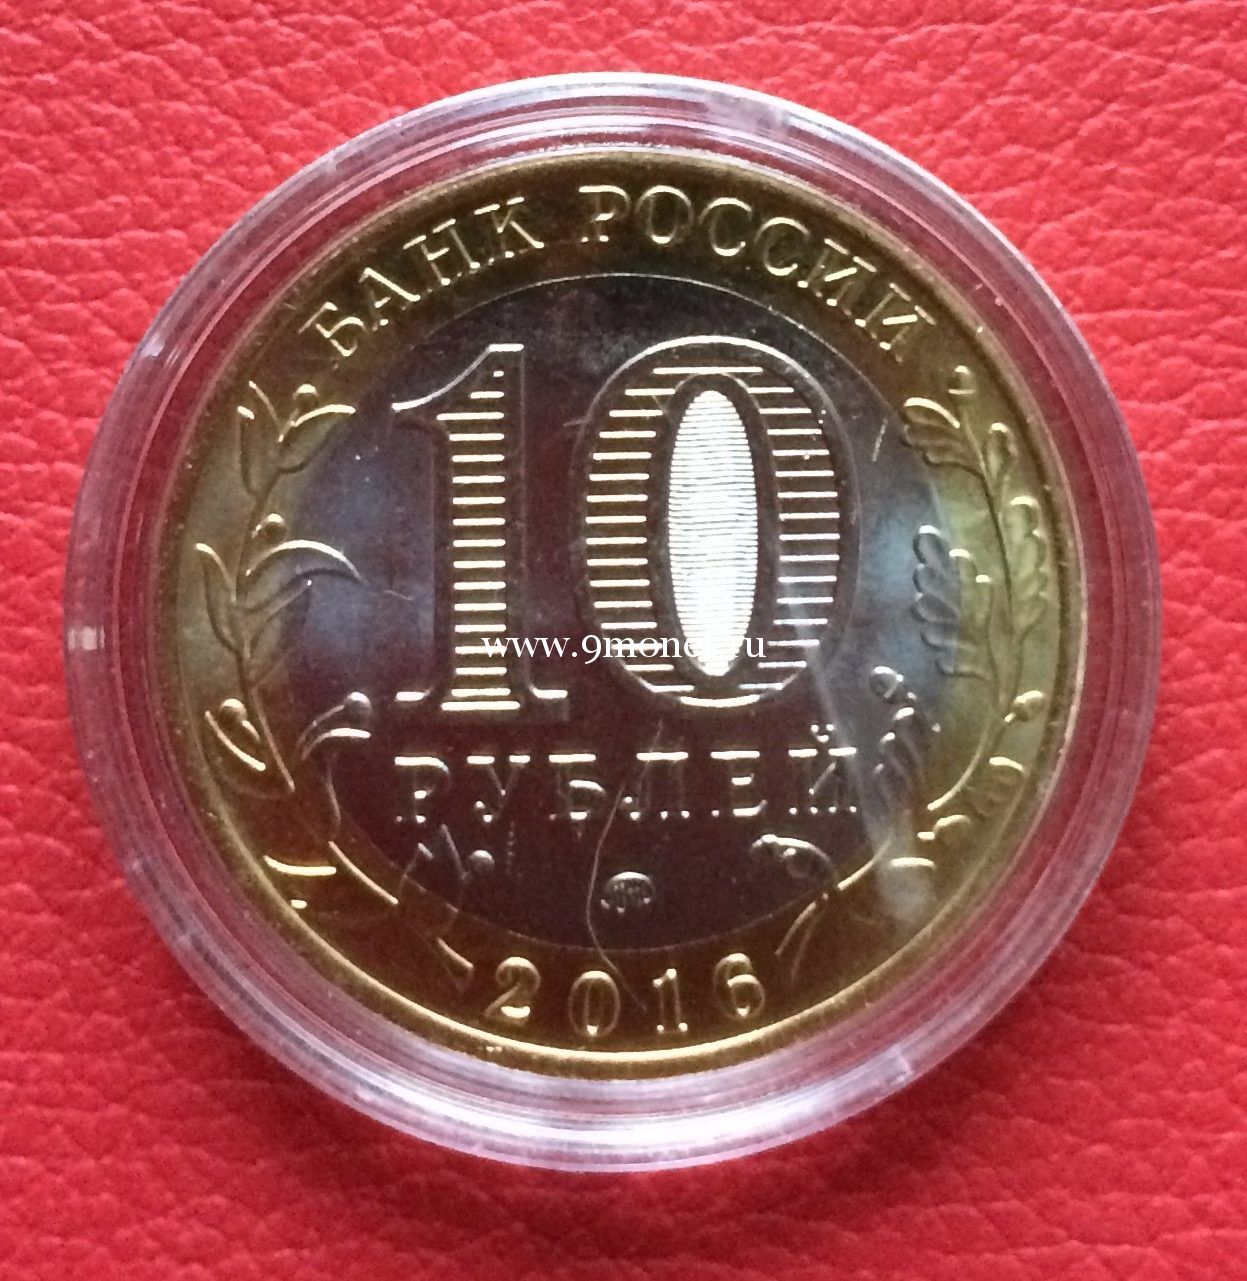 Сувенирная монета 10 рублей. Чемпионат мира по футболу FIFA 2018 года. Талисман Забивака